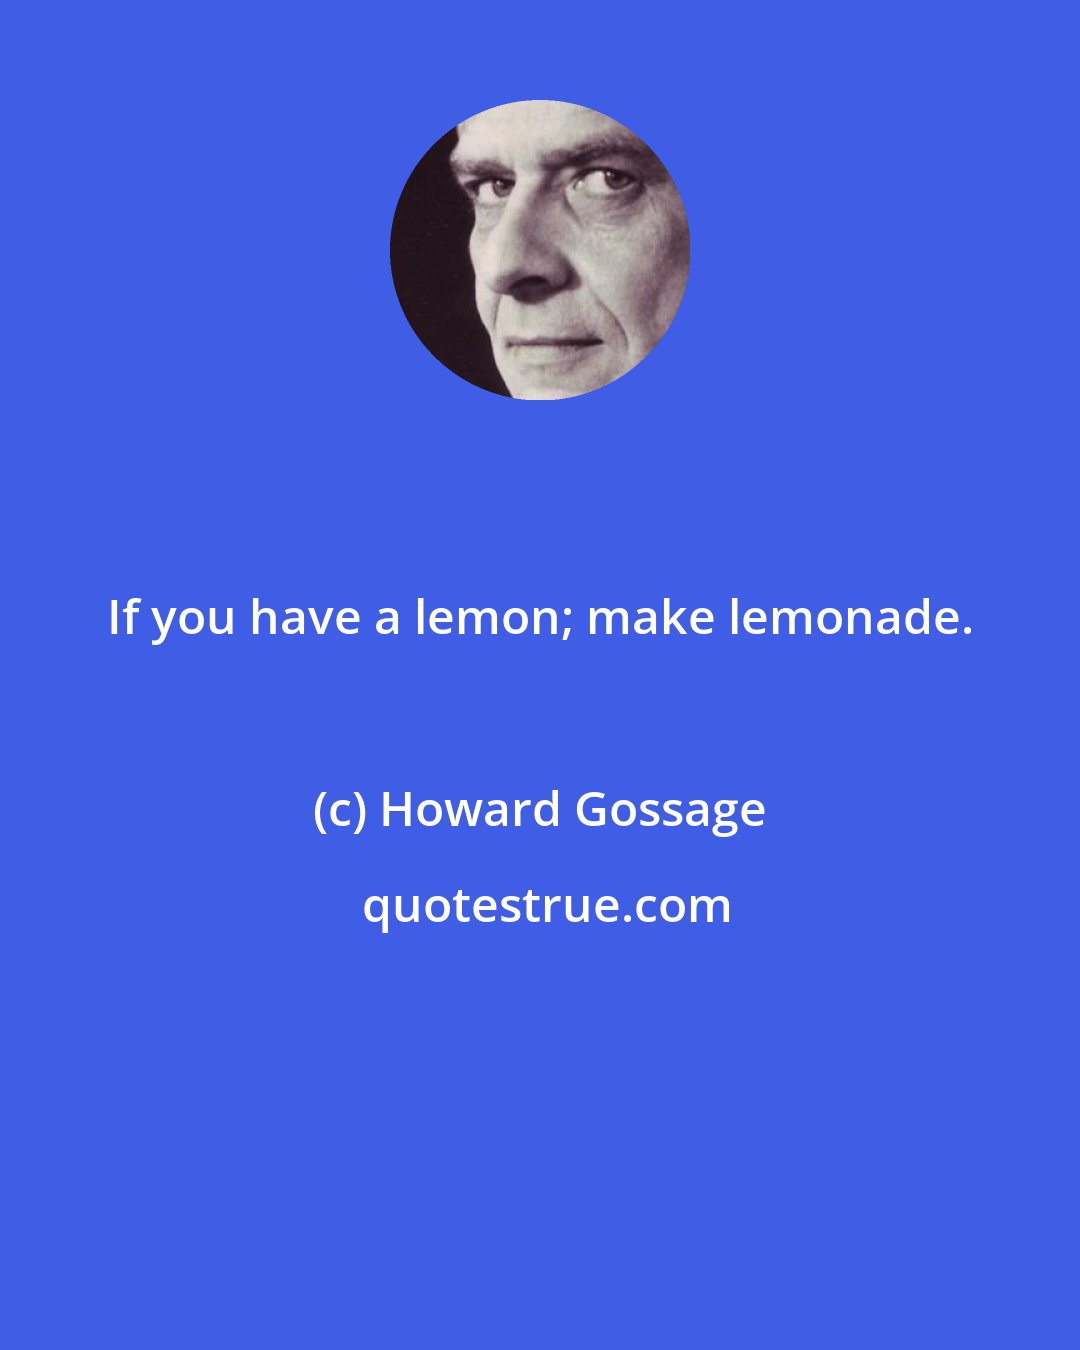 Howard Gossage: If you have a lemon; make lemonade.